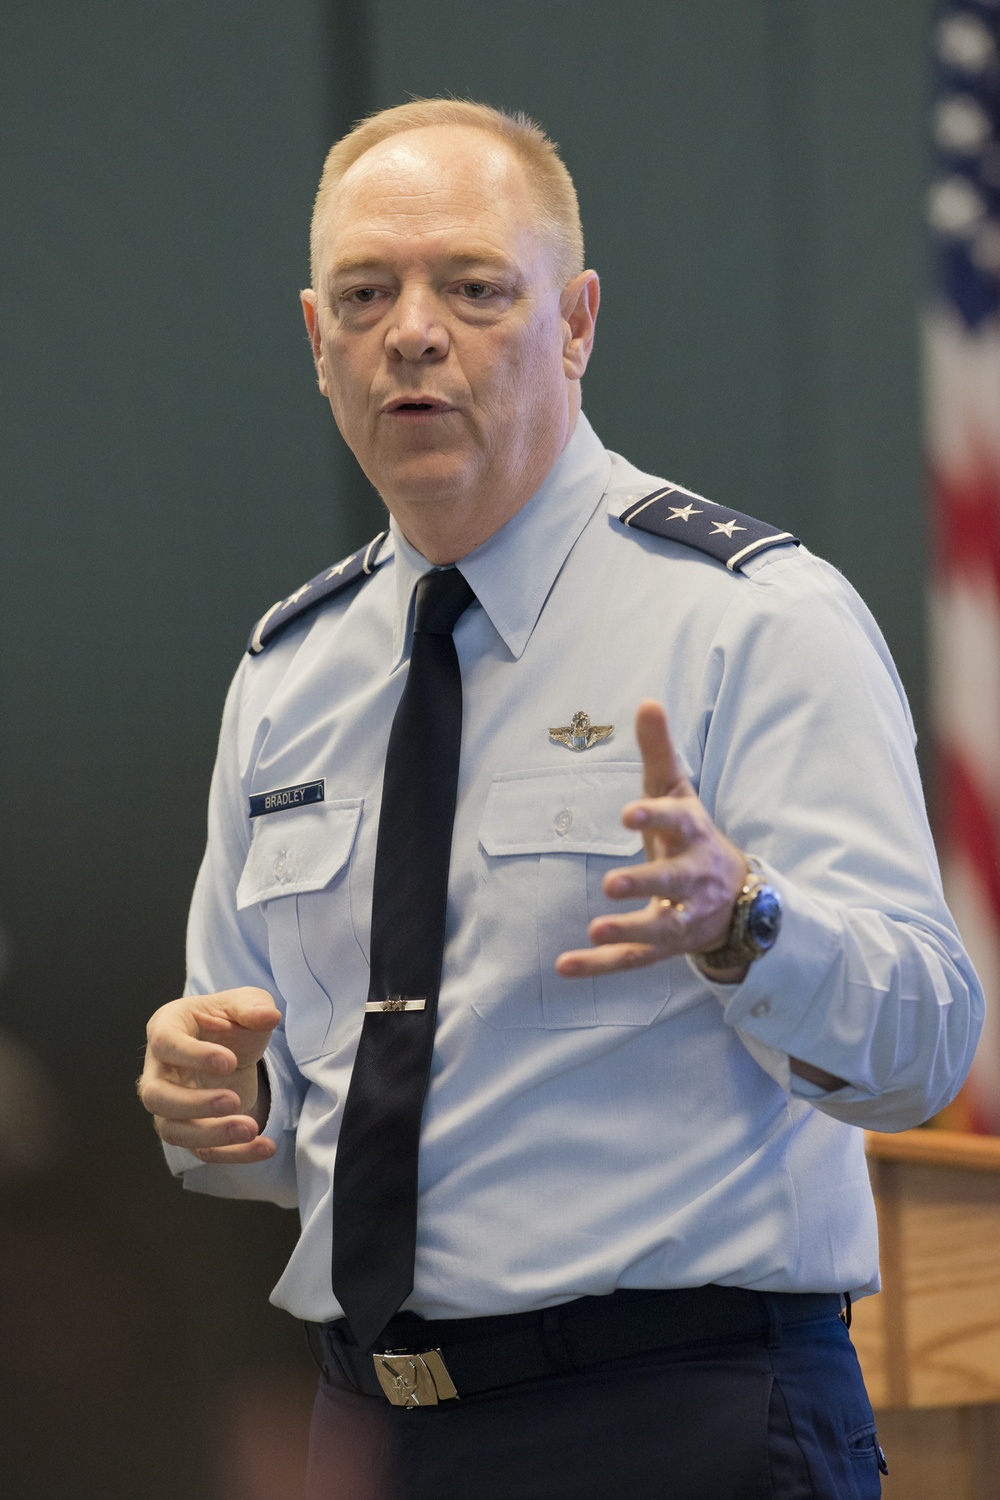 U.S. Air National Guard hosts International Air Reserves Symposium